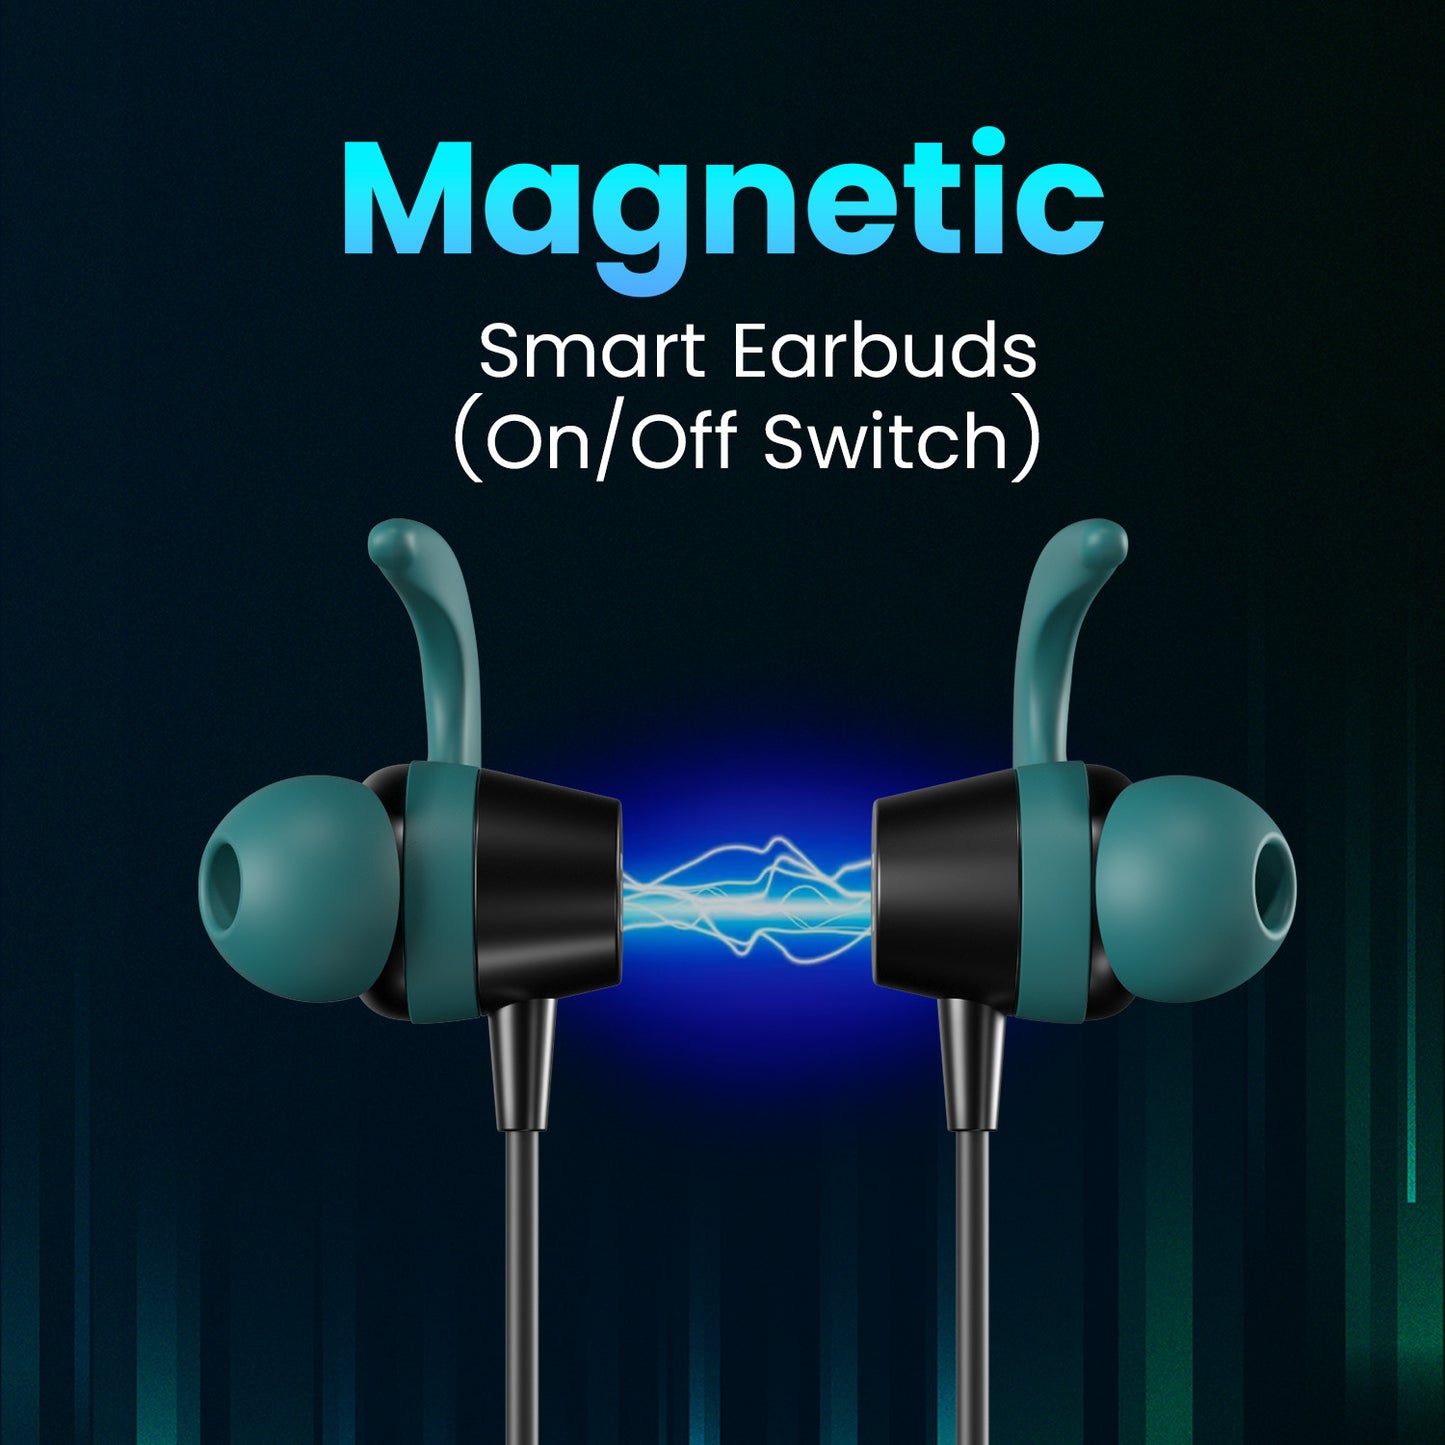 Green Portronics harmonics x2 Neckband Wireless headphones and bluetooth earphones come with smart magnetic earbuds